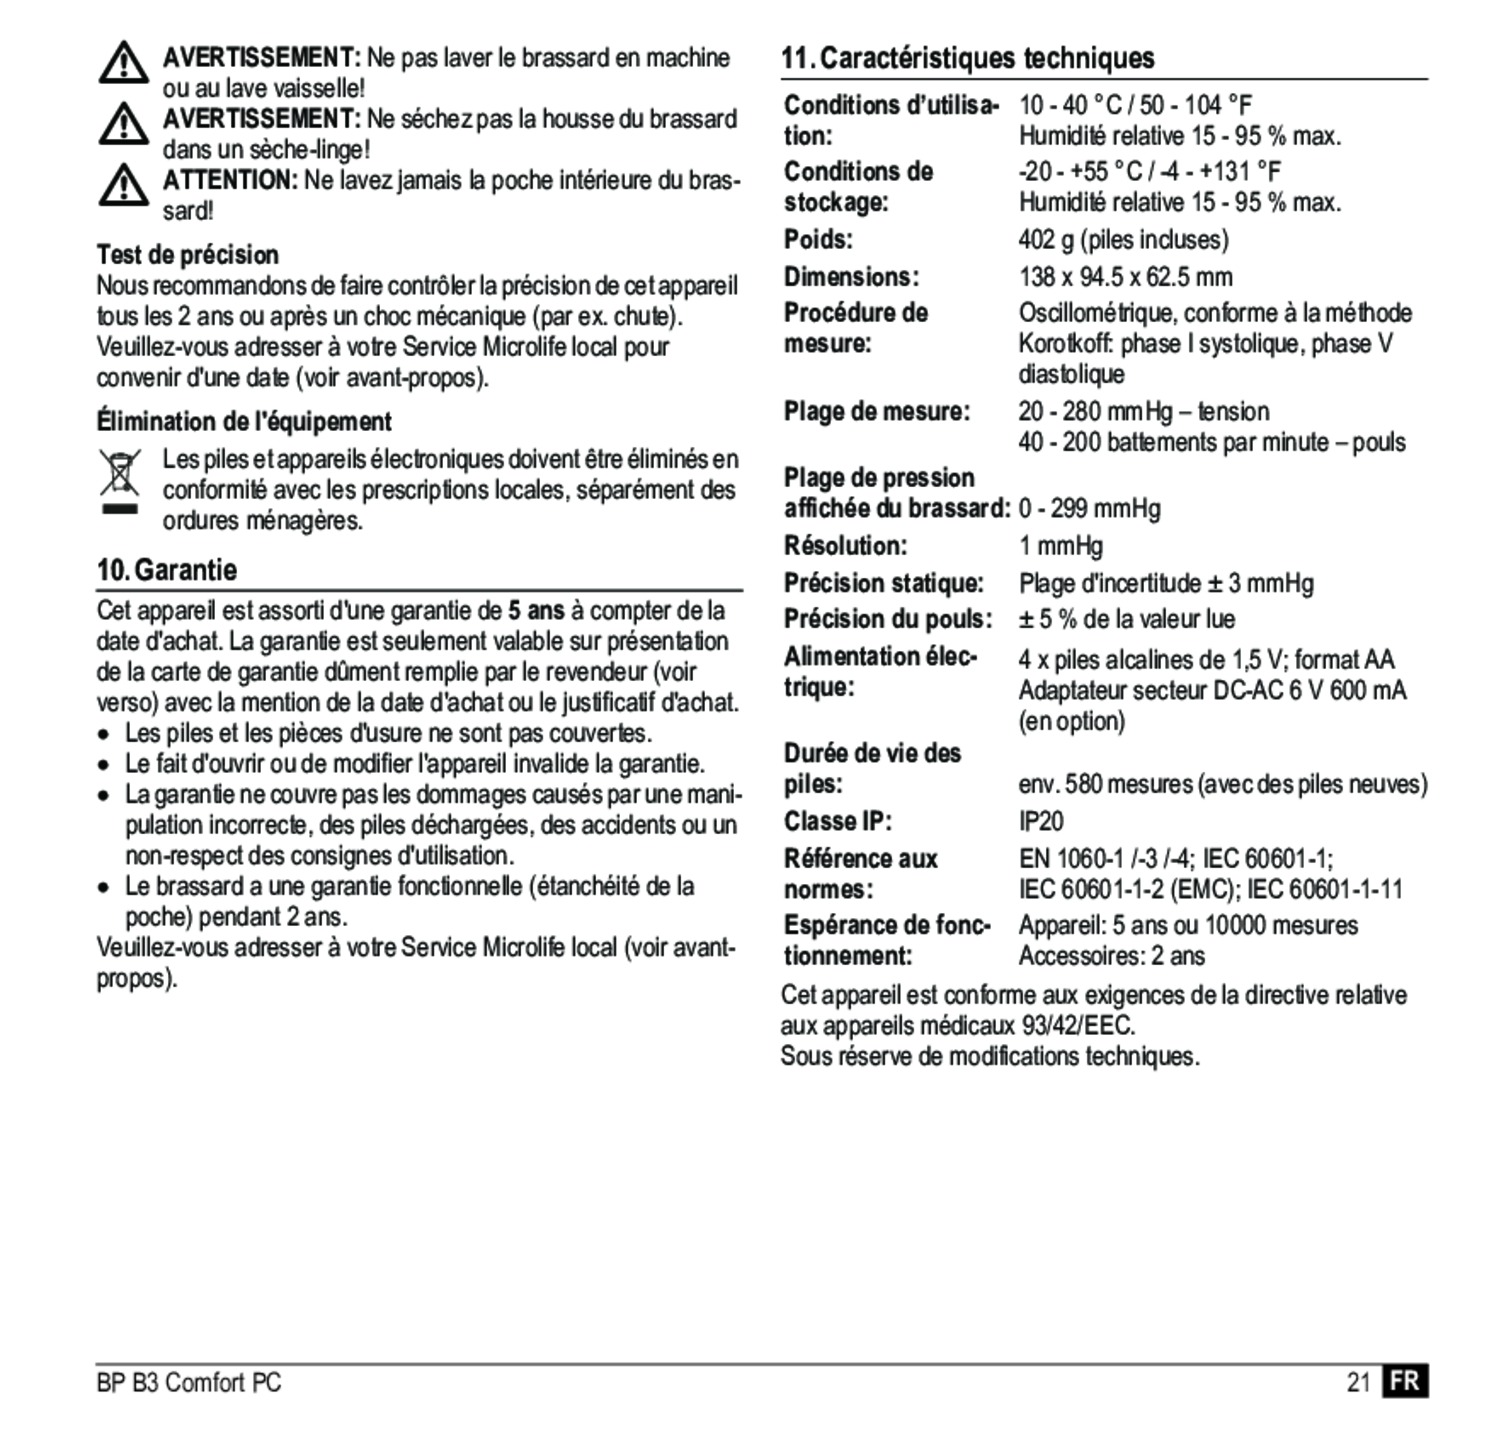 Microlife BP Bloeddrukmeter B3 Comfort PC afbeelding van document #23, gebruiksaanwijzing